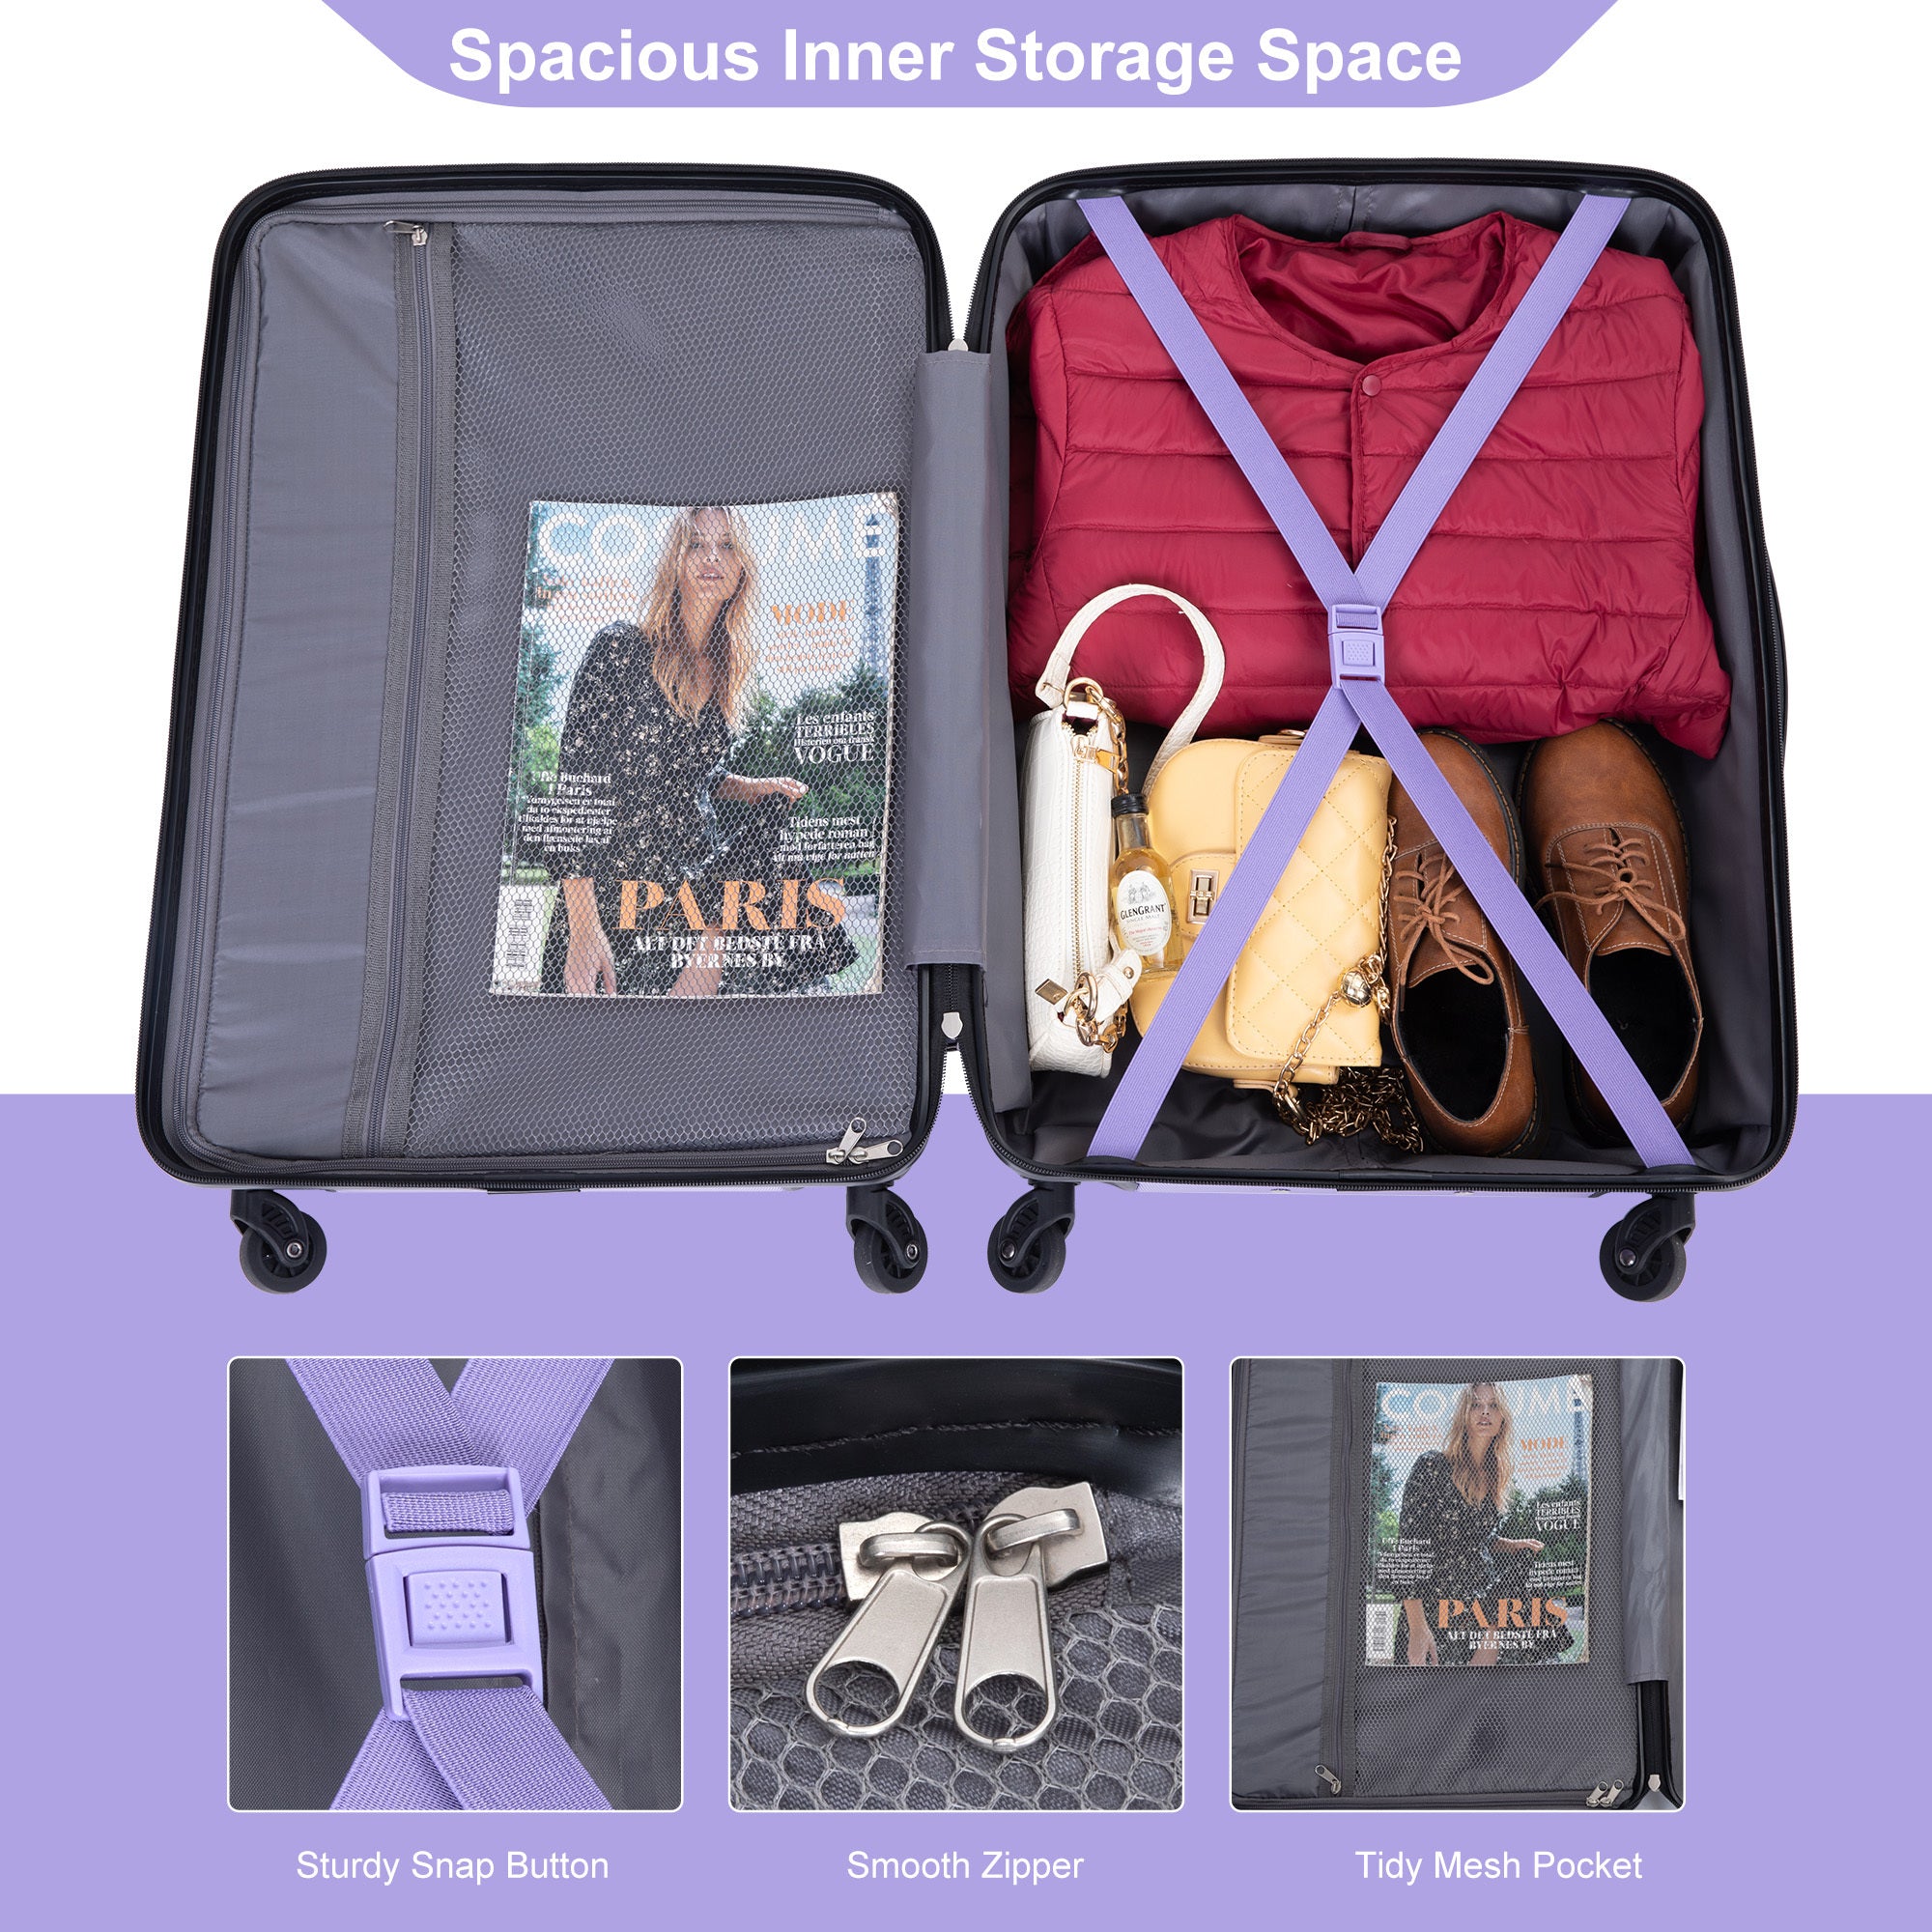 Expandable 3 Piece Luggage Sets PC Lightweight & purple-pc